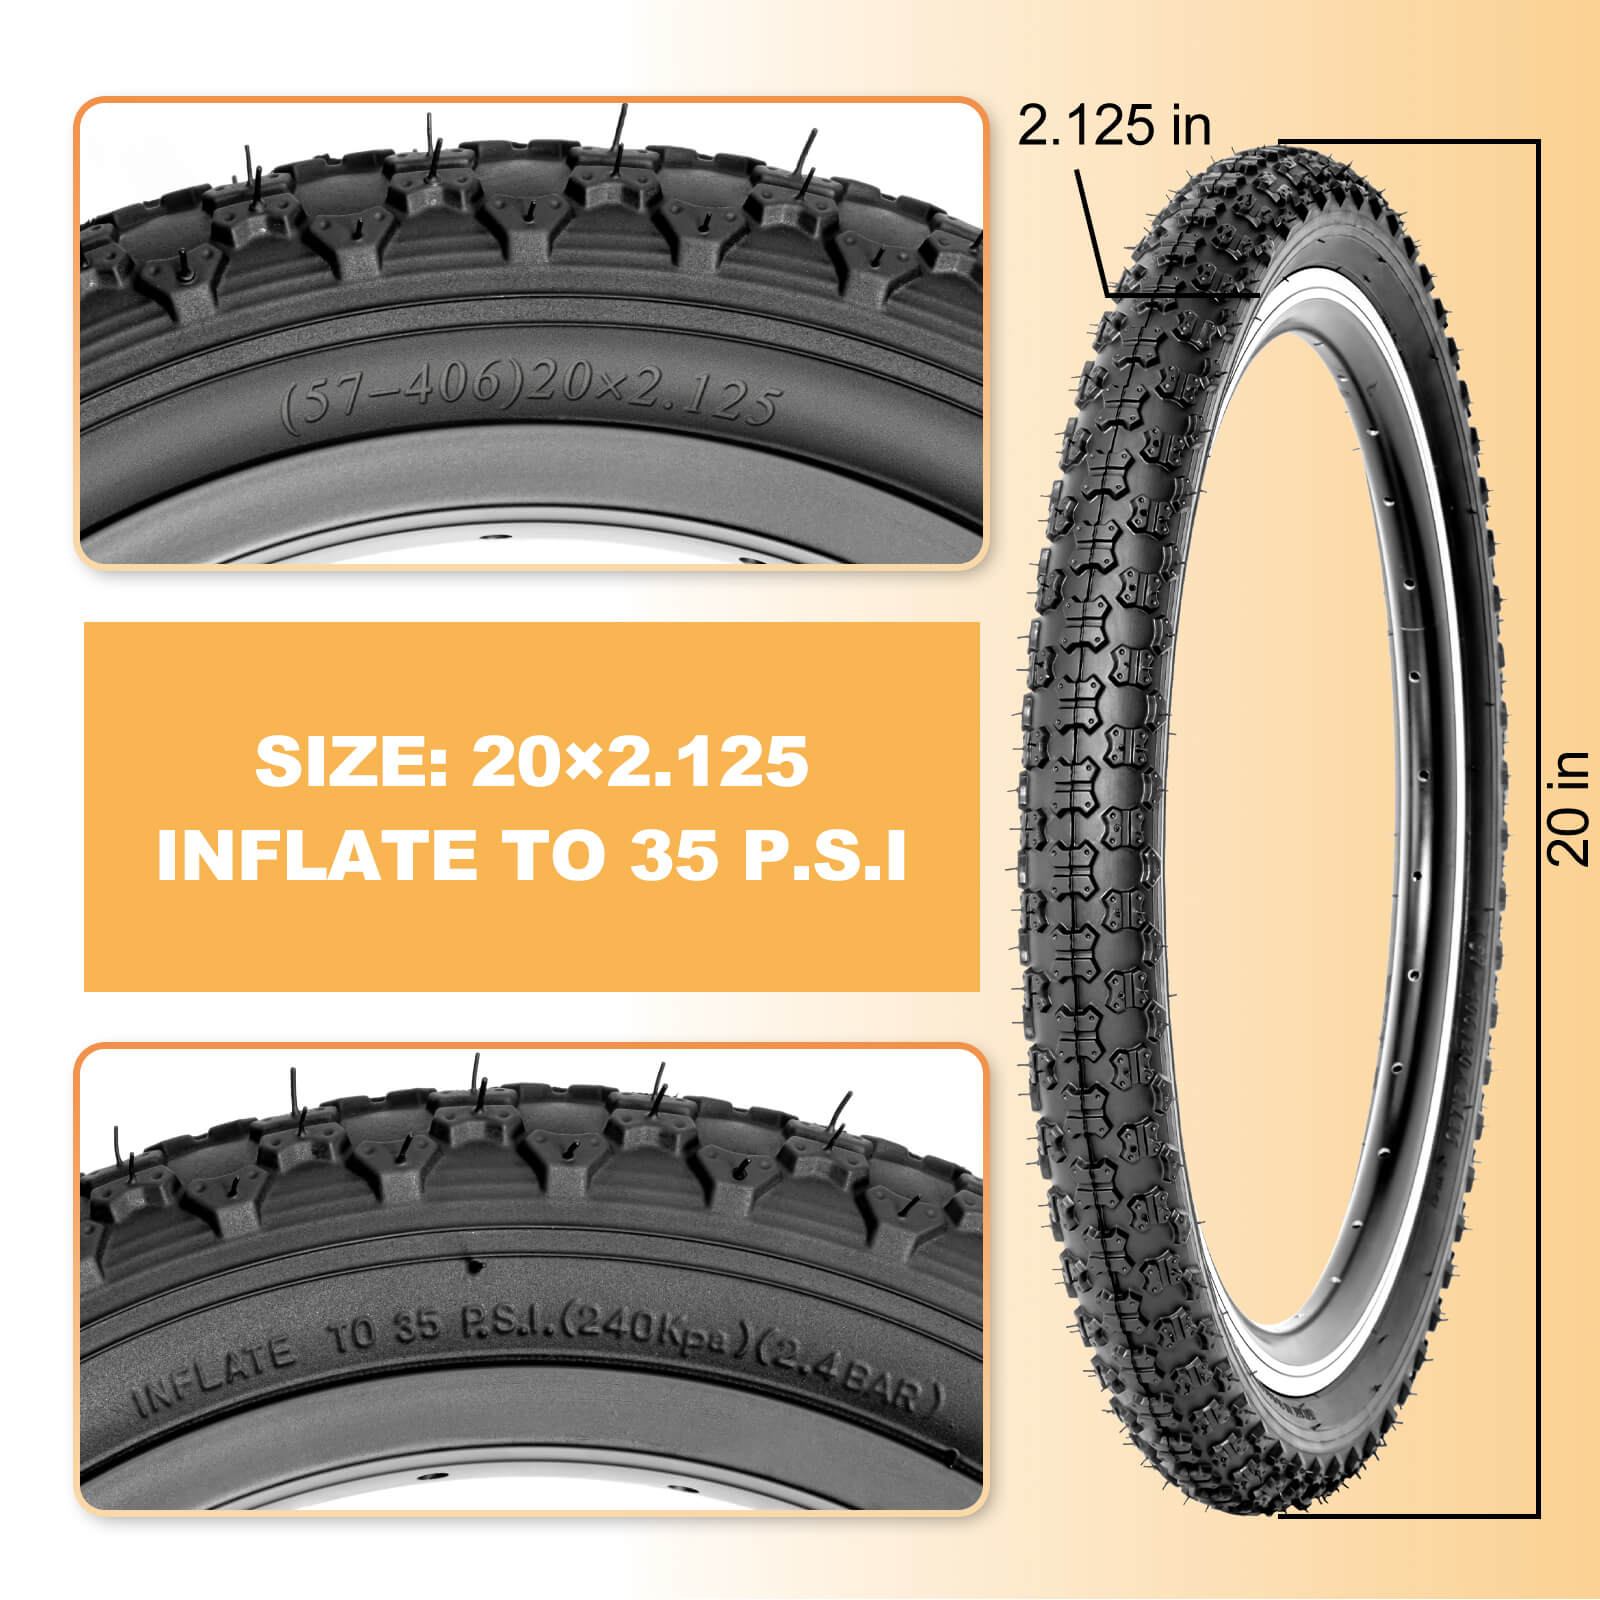 Hycline Bowlite 20"×2.125 Childs Bike Tire